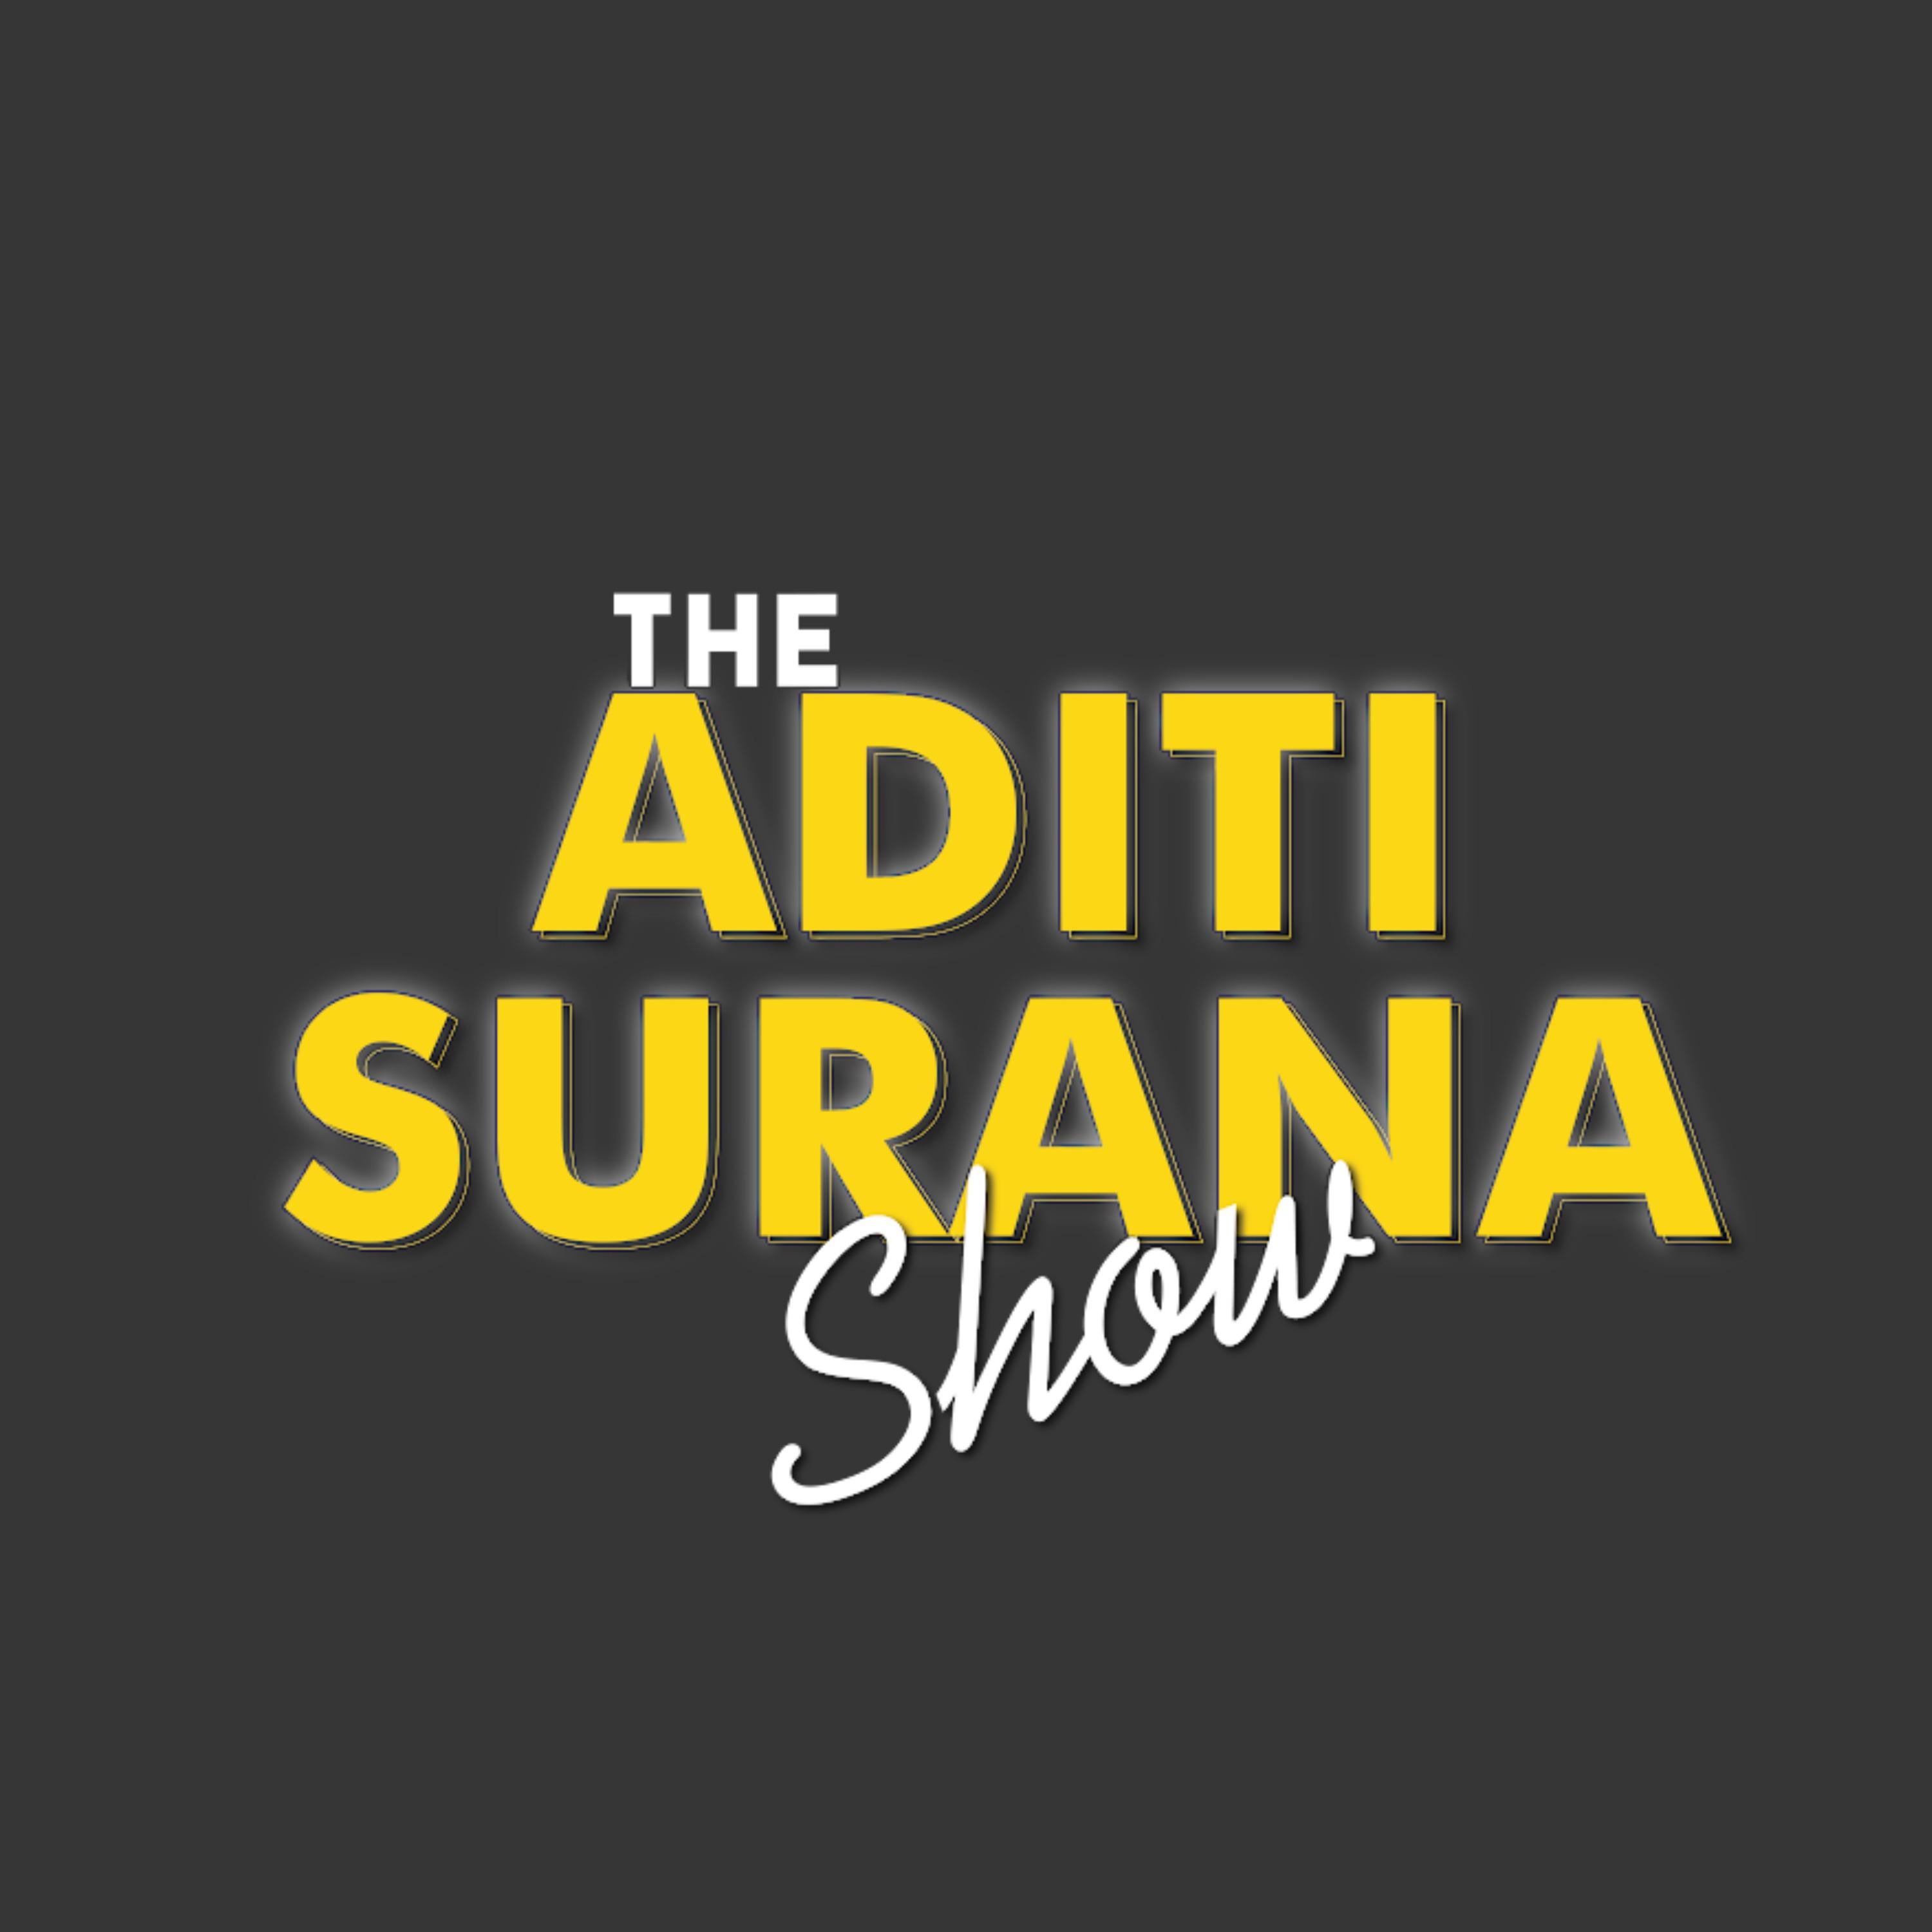 The Aditi Surana Show